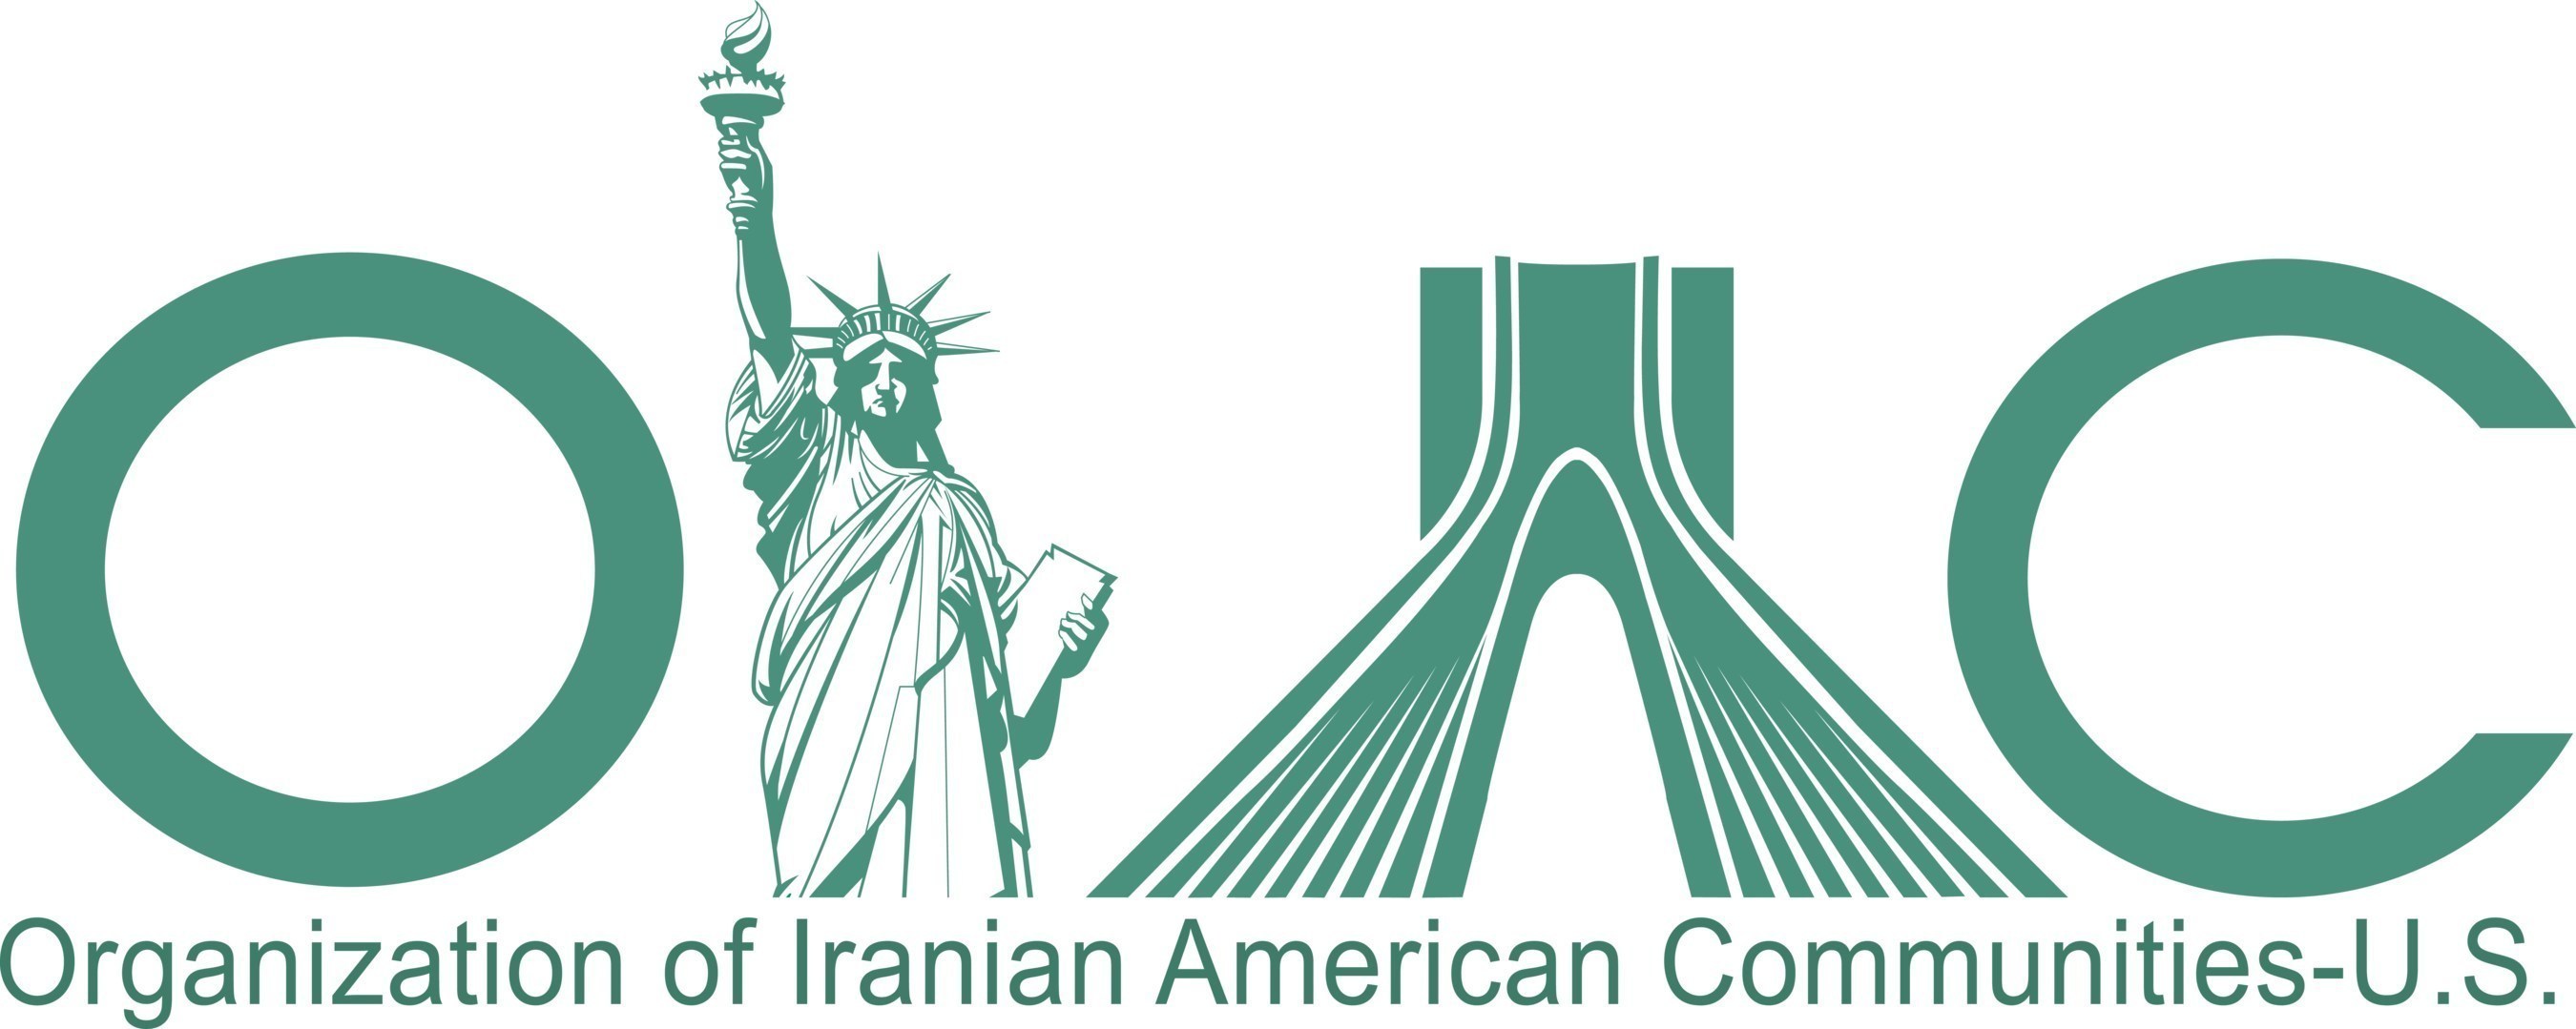 Organization of Iranian American Communities - U.S. (OIACUS)